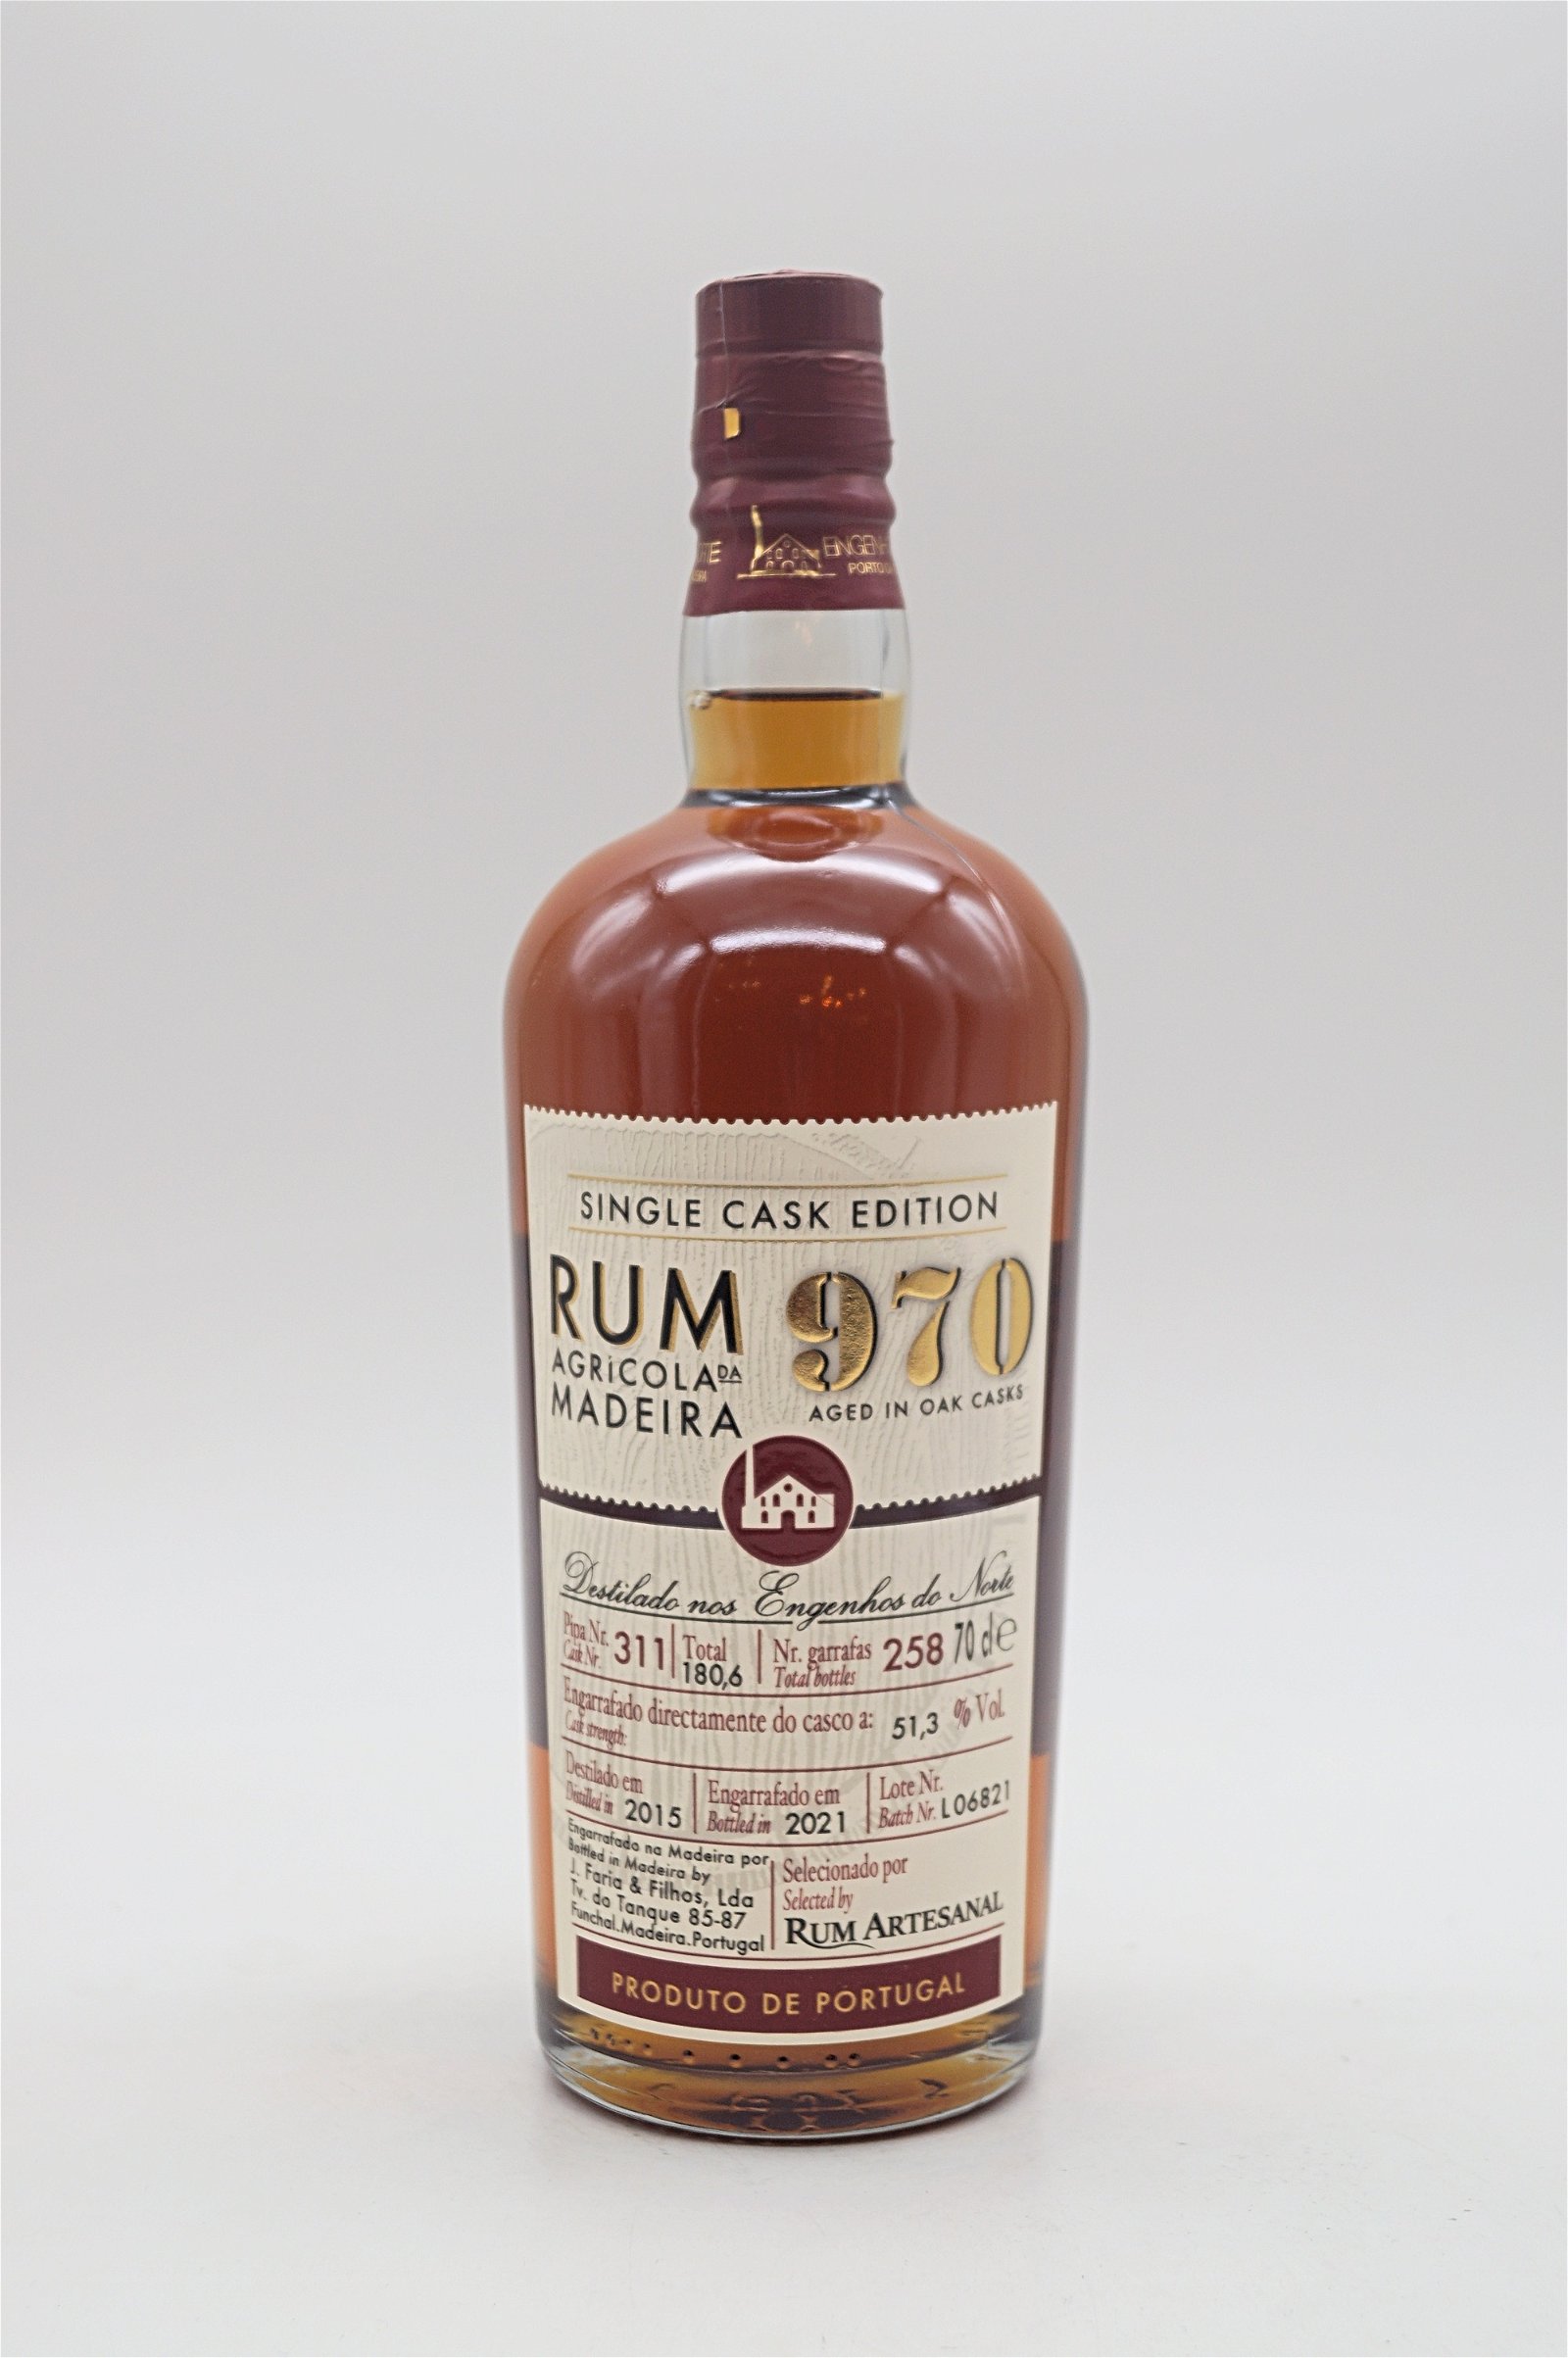 Rum Artesanal Single Cask Rum 2015/2021 Madeira Cask #311 